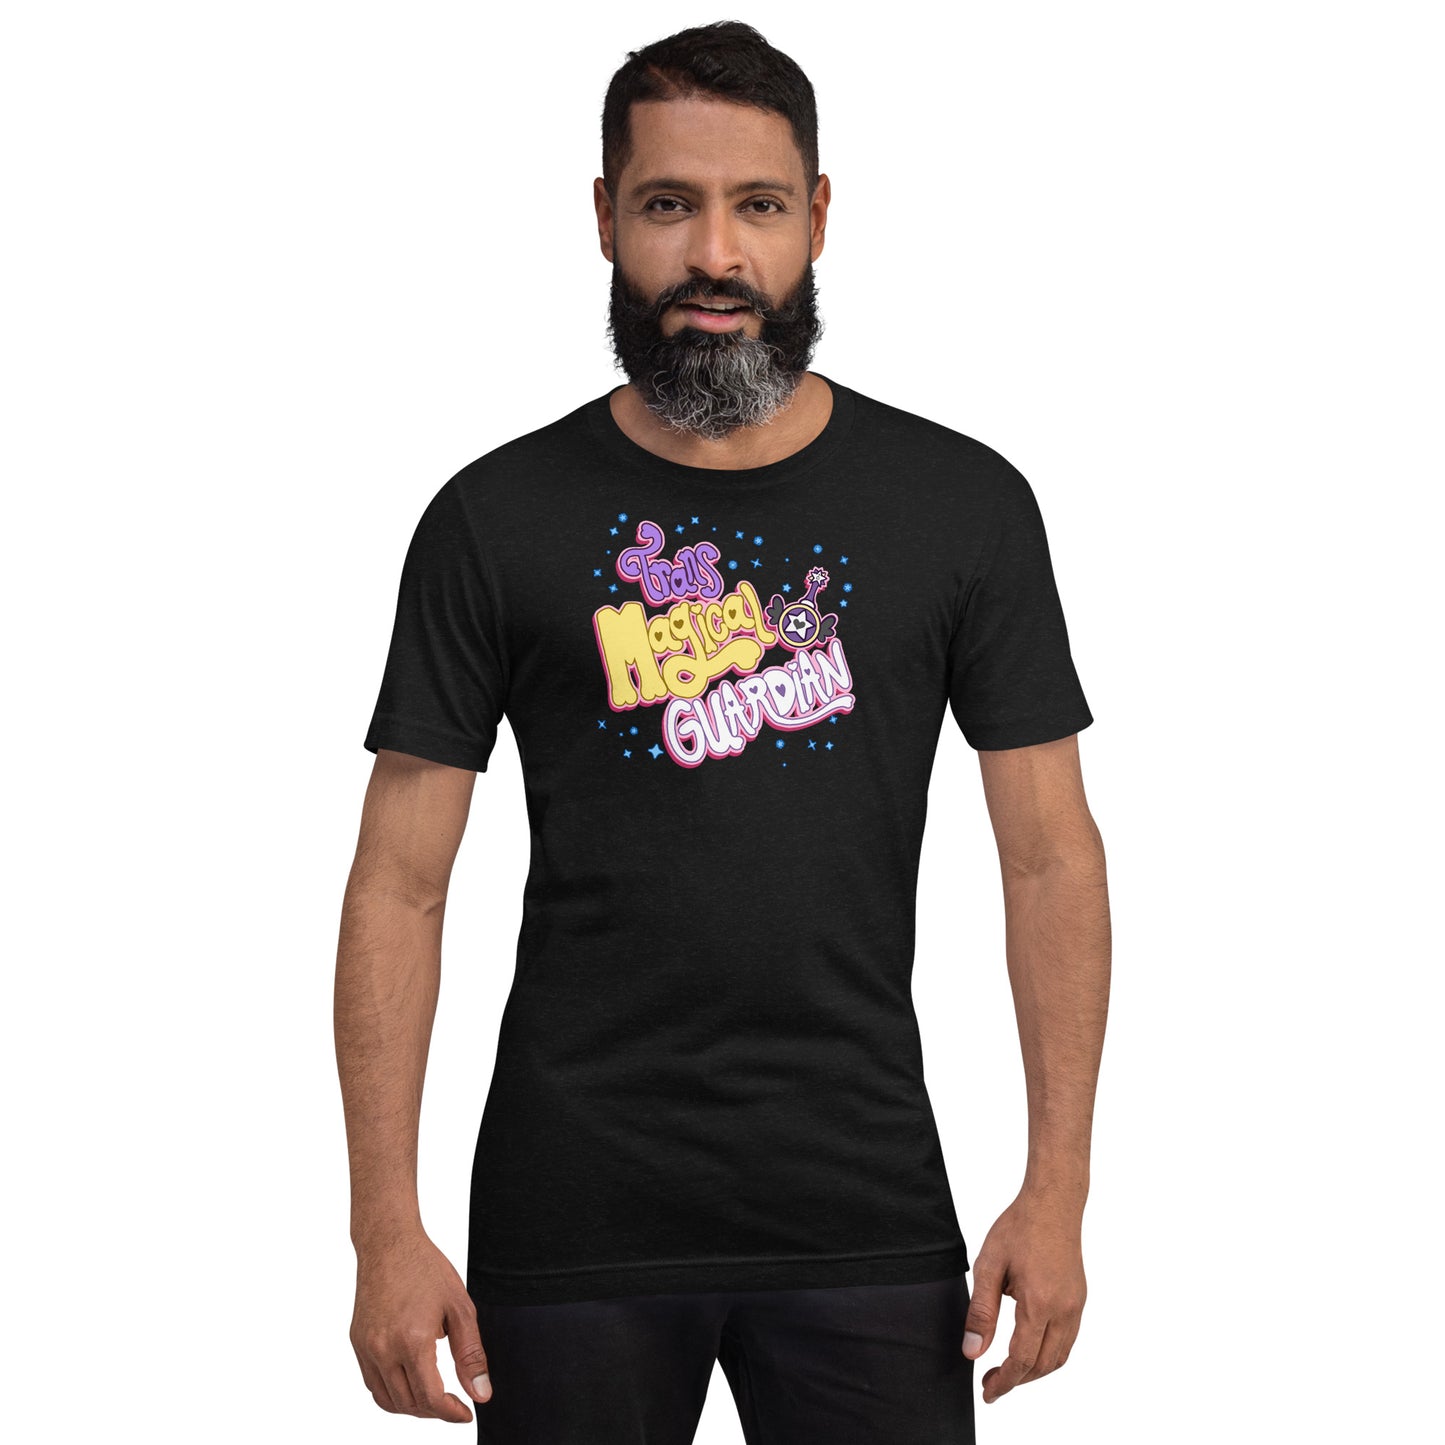 Trans Magical Guardian T-Shirt